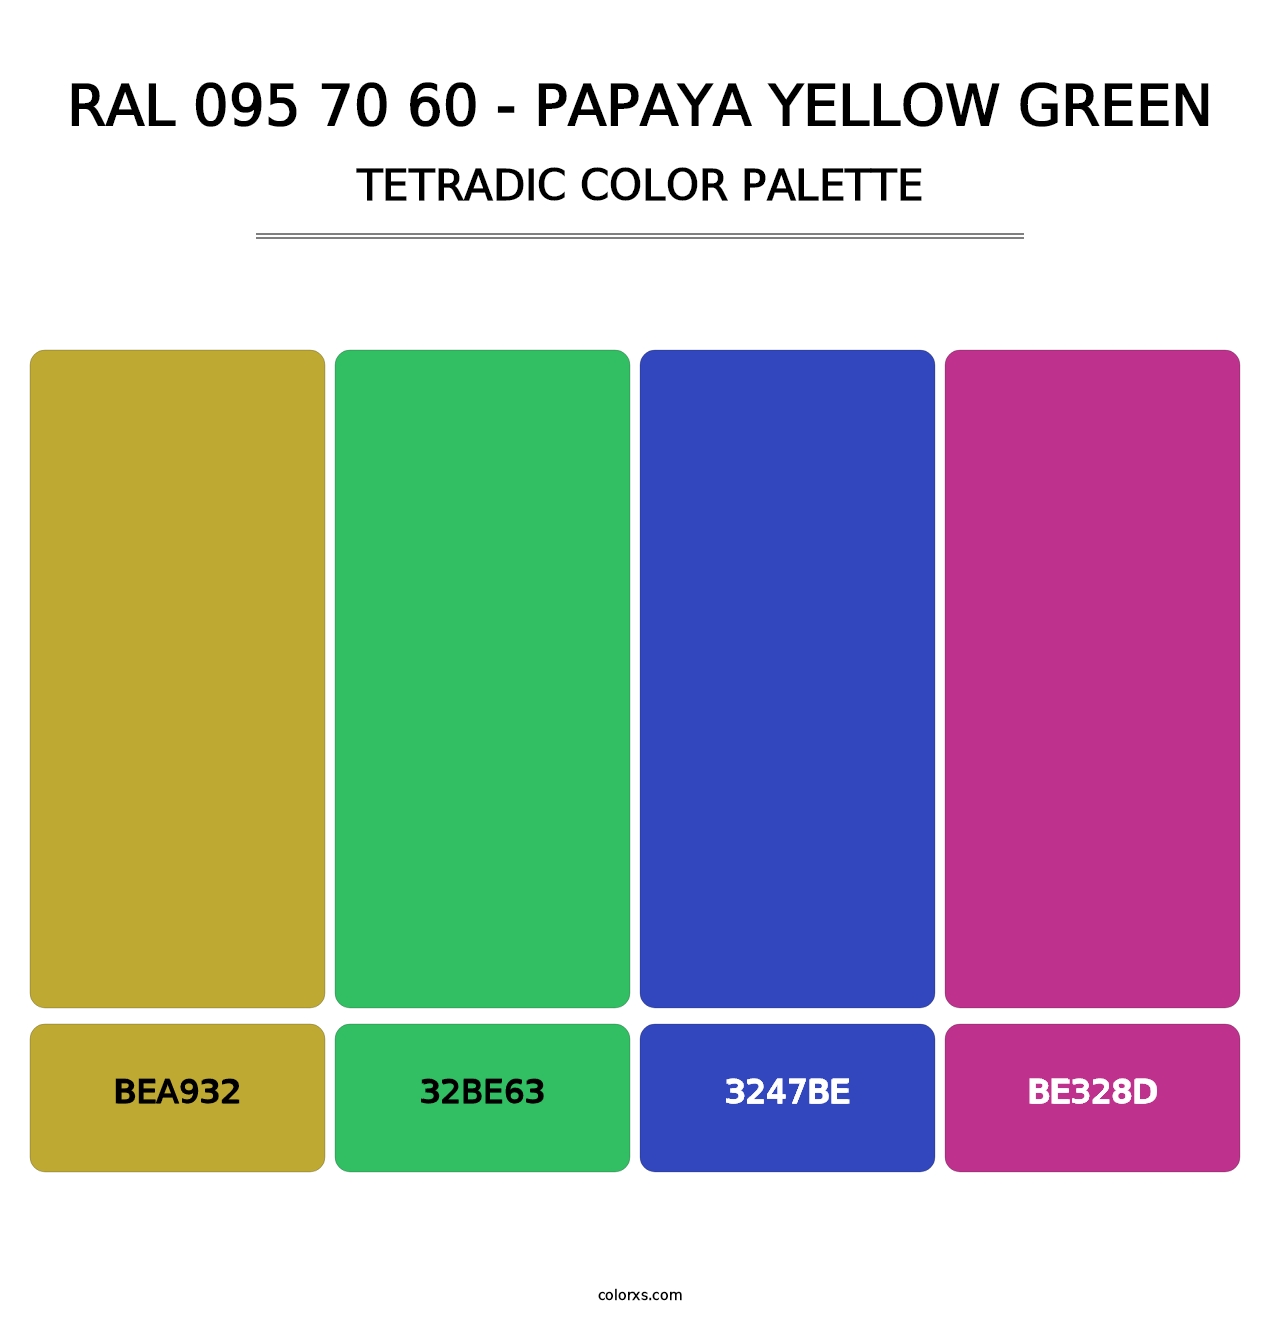 RAL 095 70 60 - Papaya Yellow Green - Tetradic Color Palette